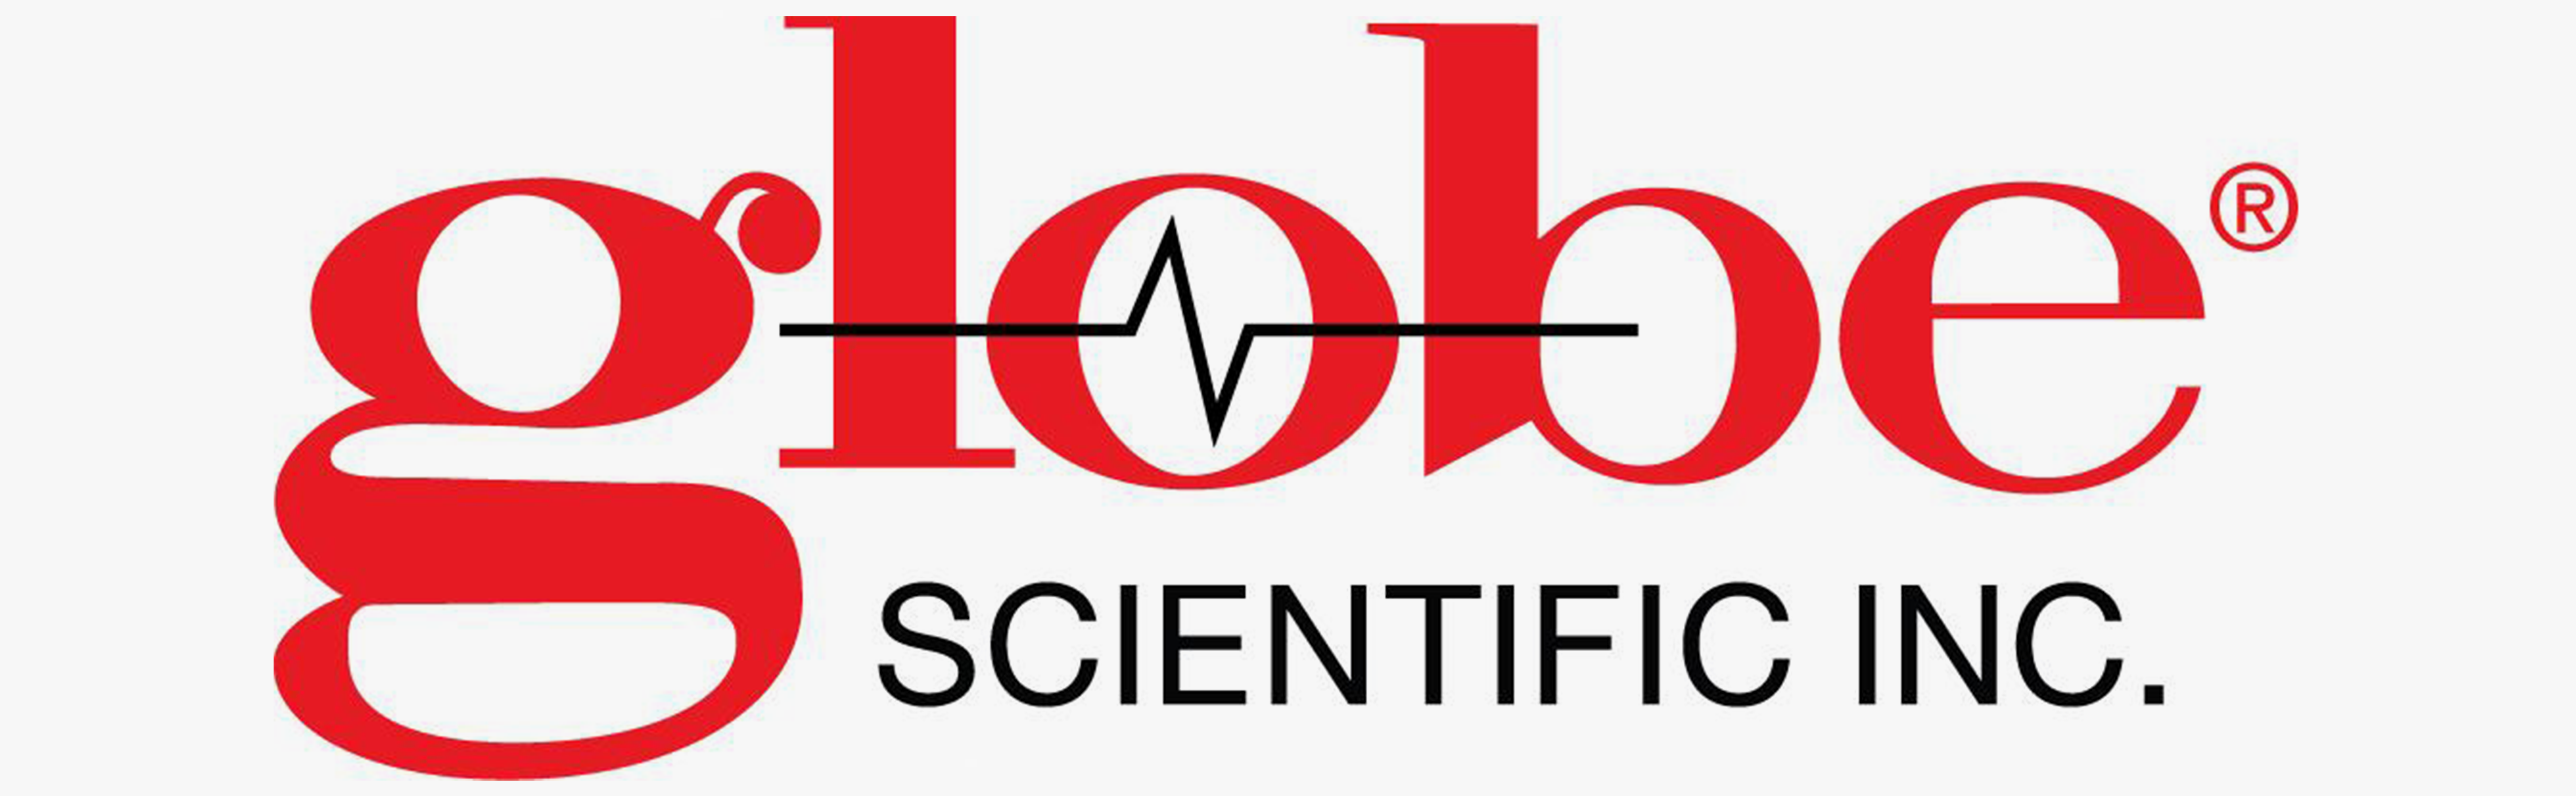 Globe Scientific, Inc.